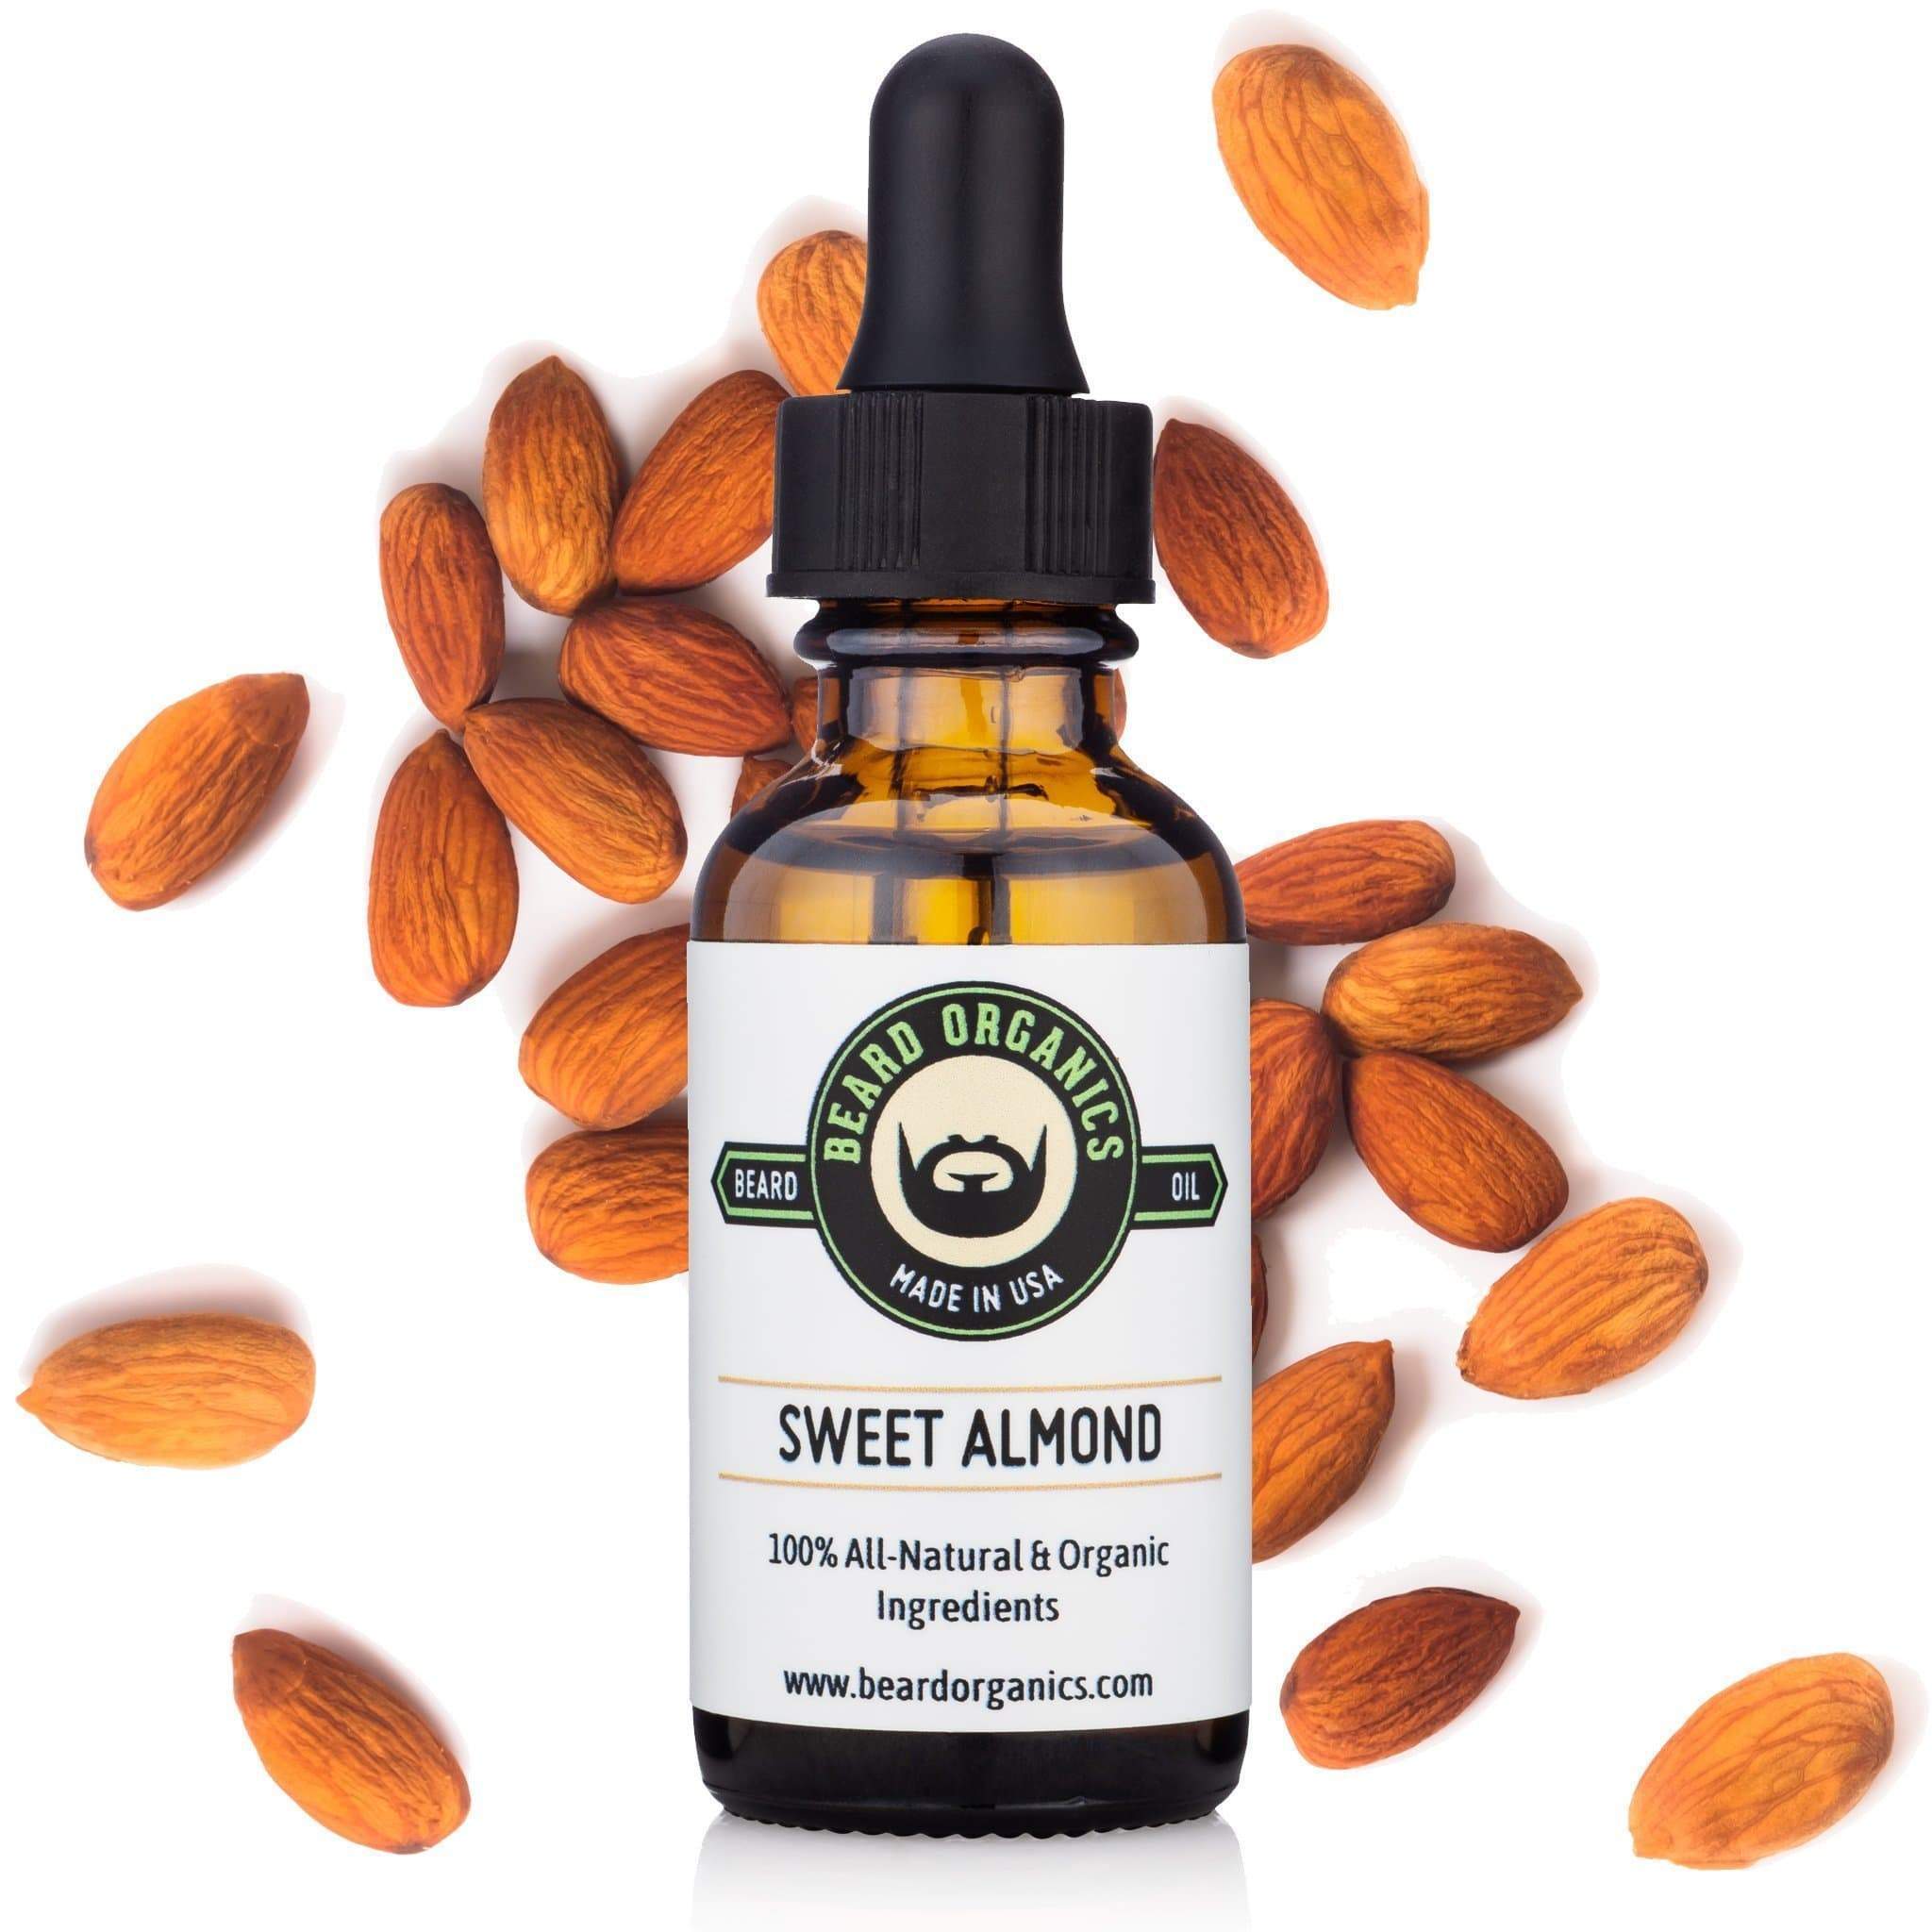 Sweet Almond Beard Oil - Fragrance-Free by Beard Organics